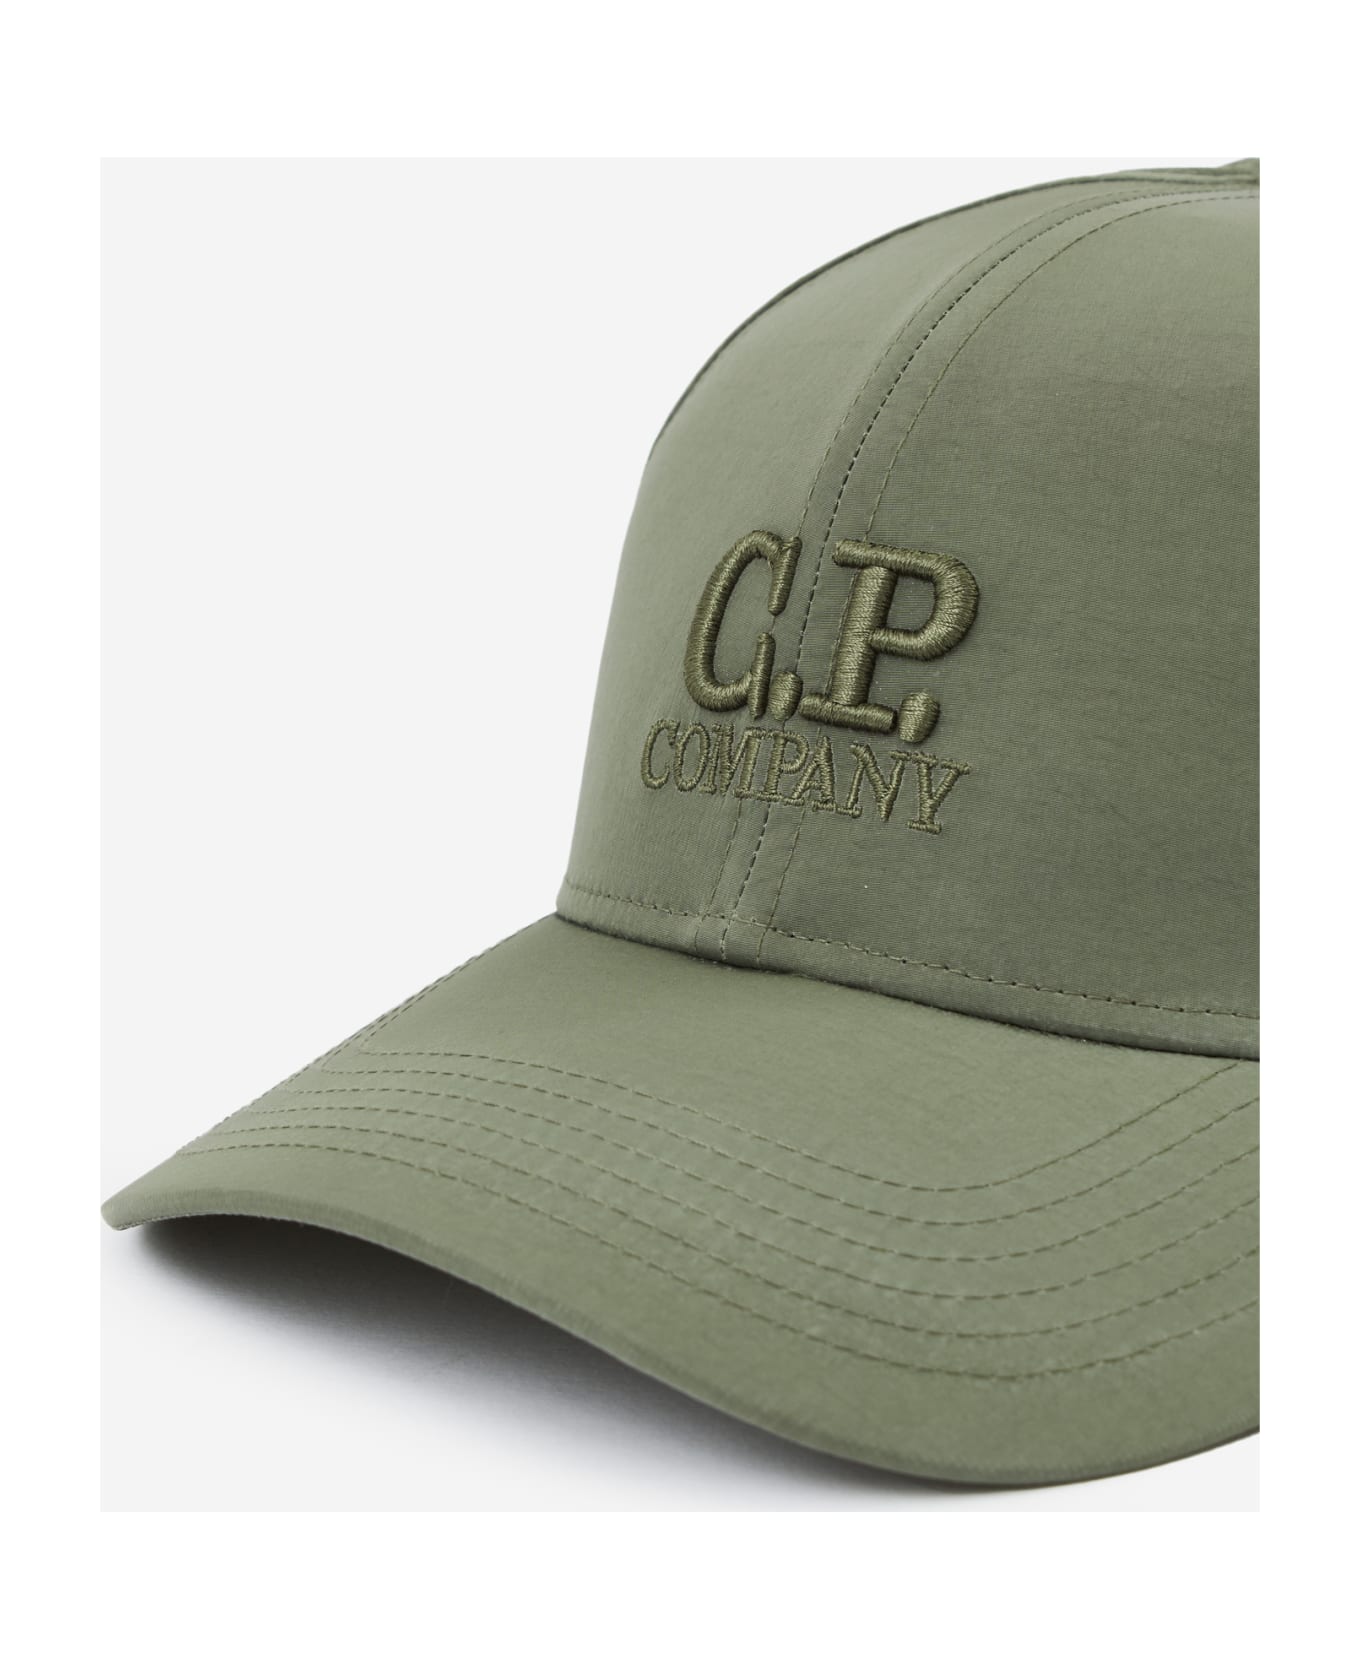 C.P. Company Hats - green